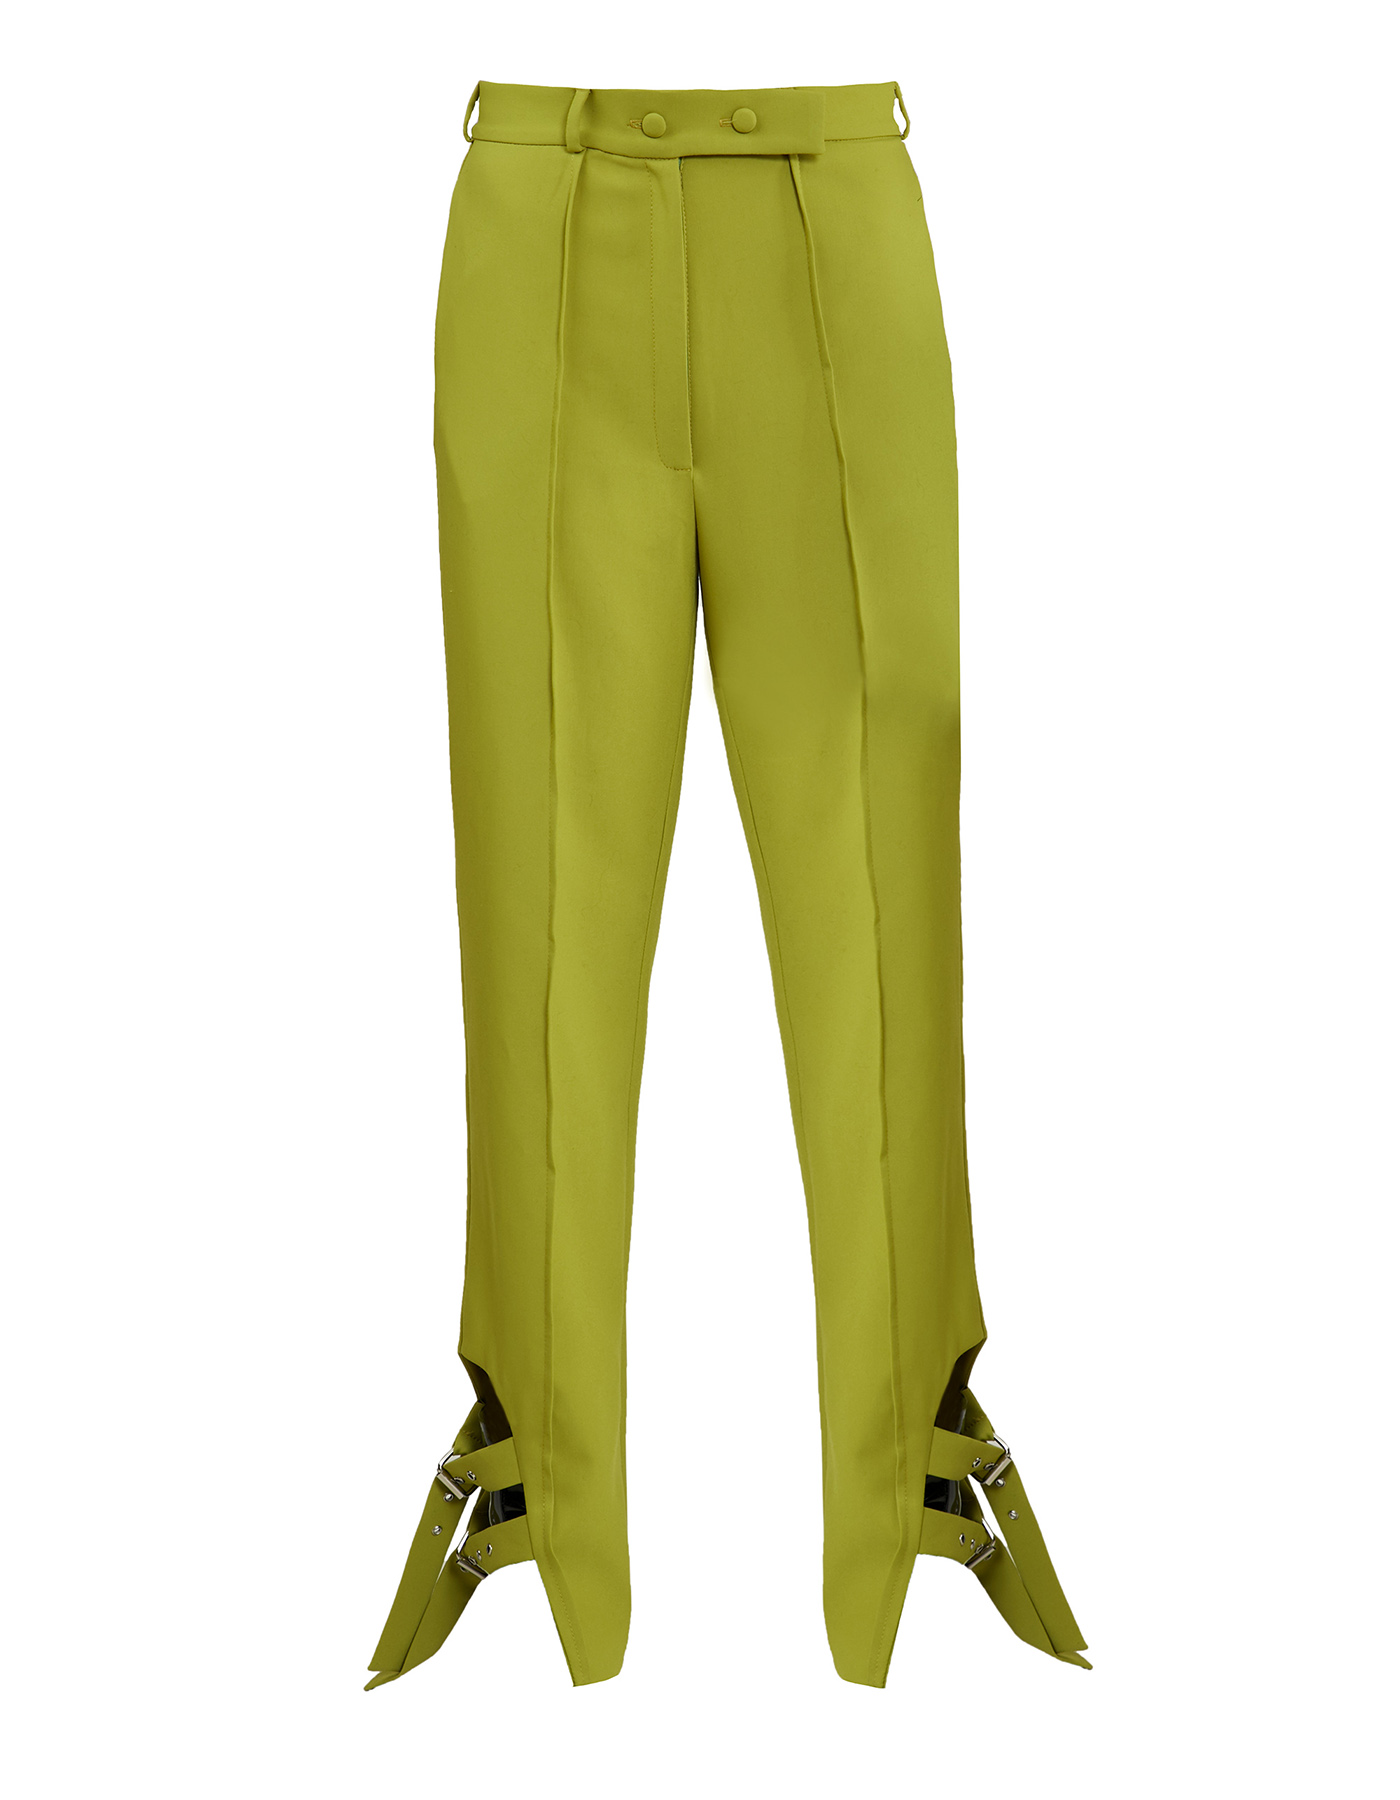 Chartreuse Green pants